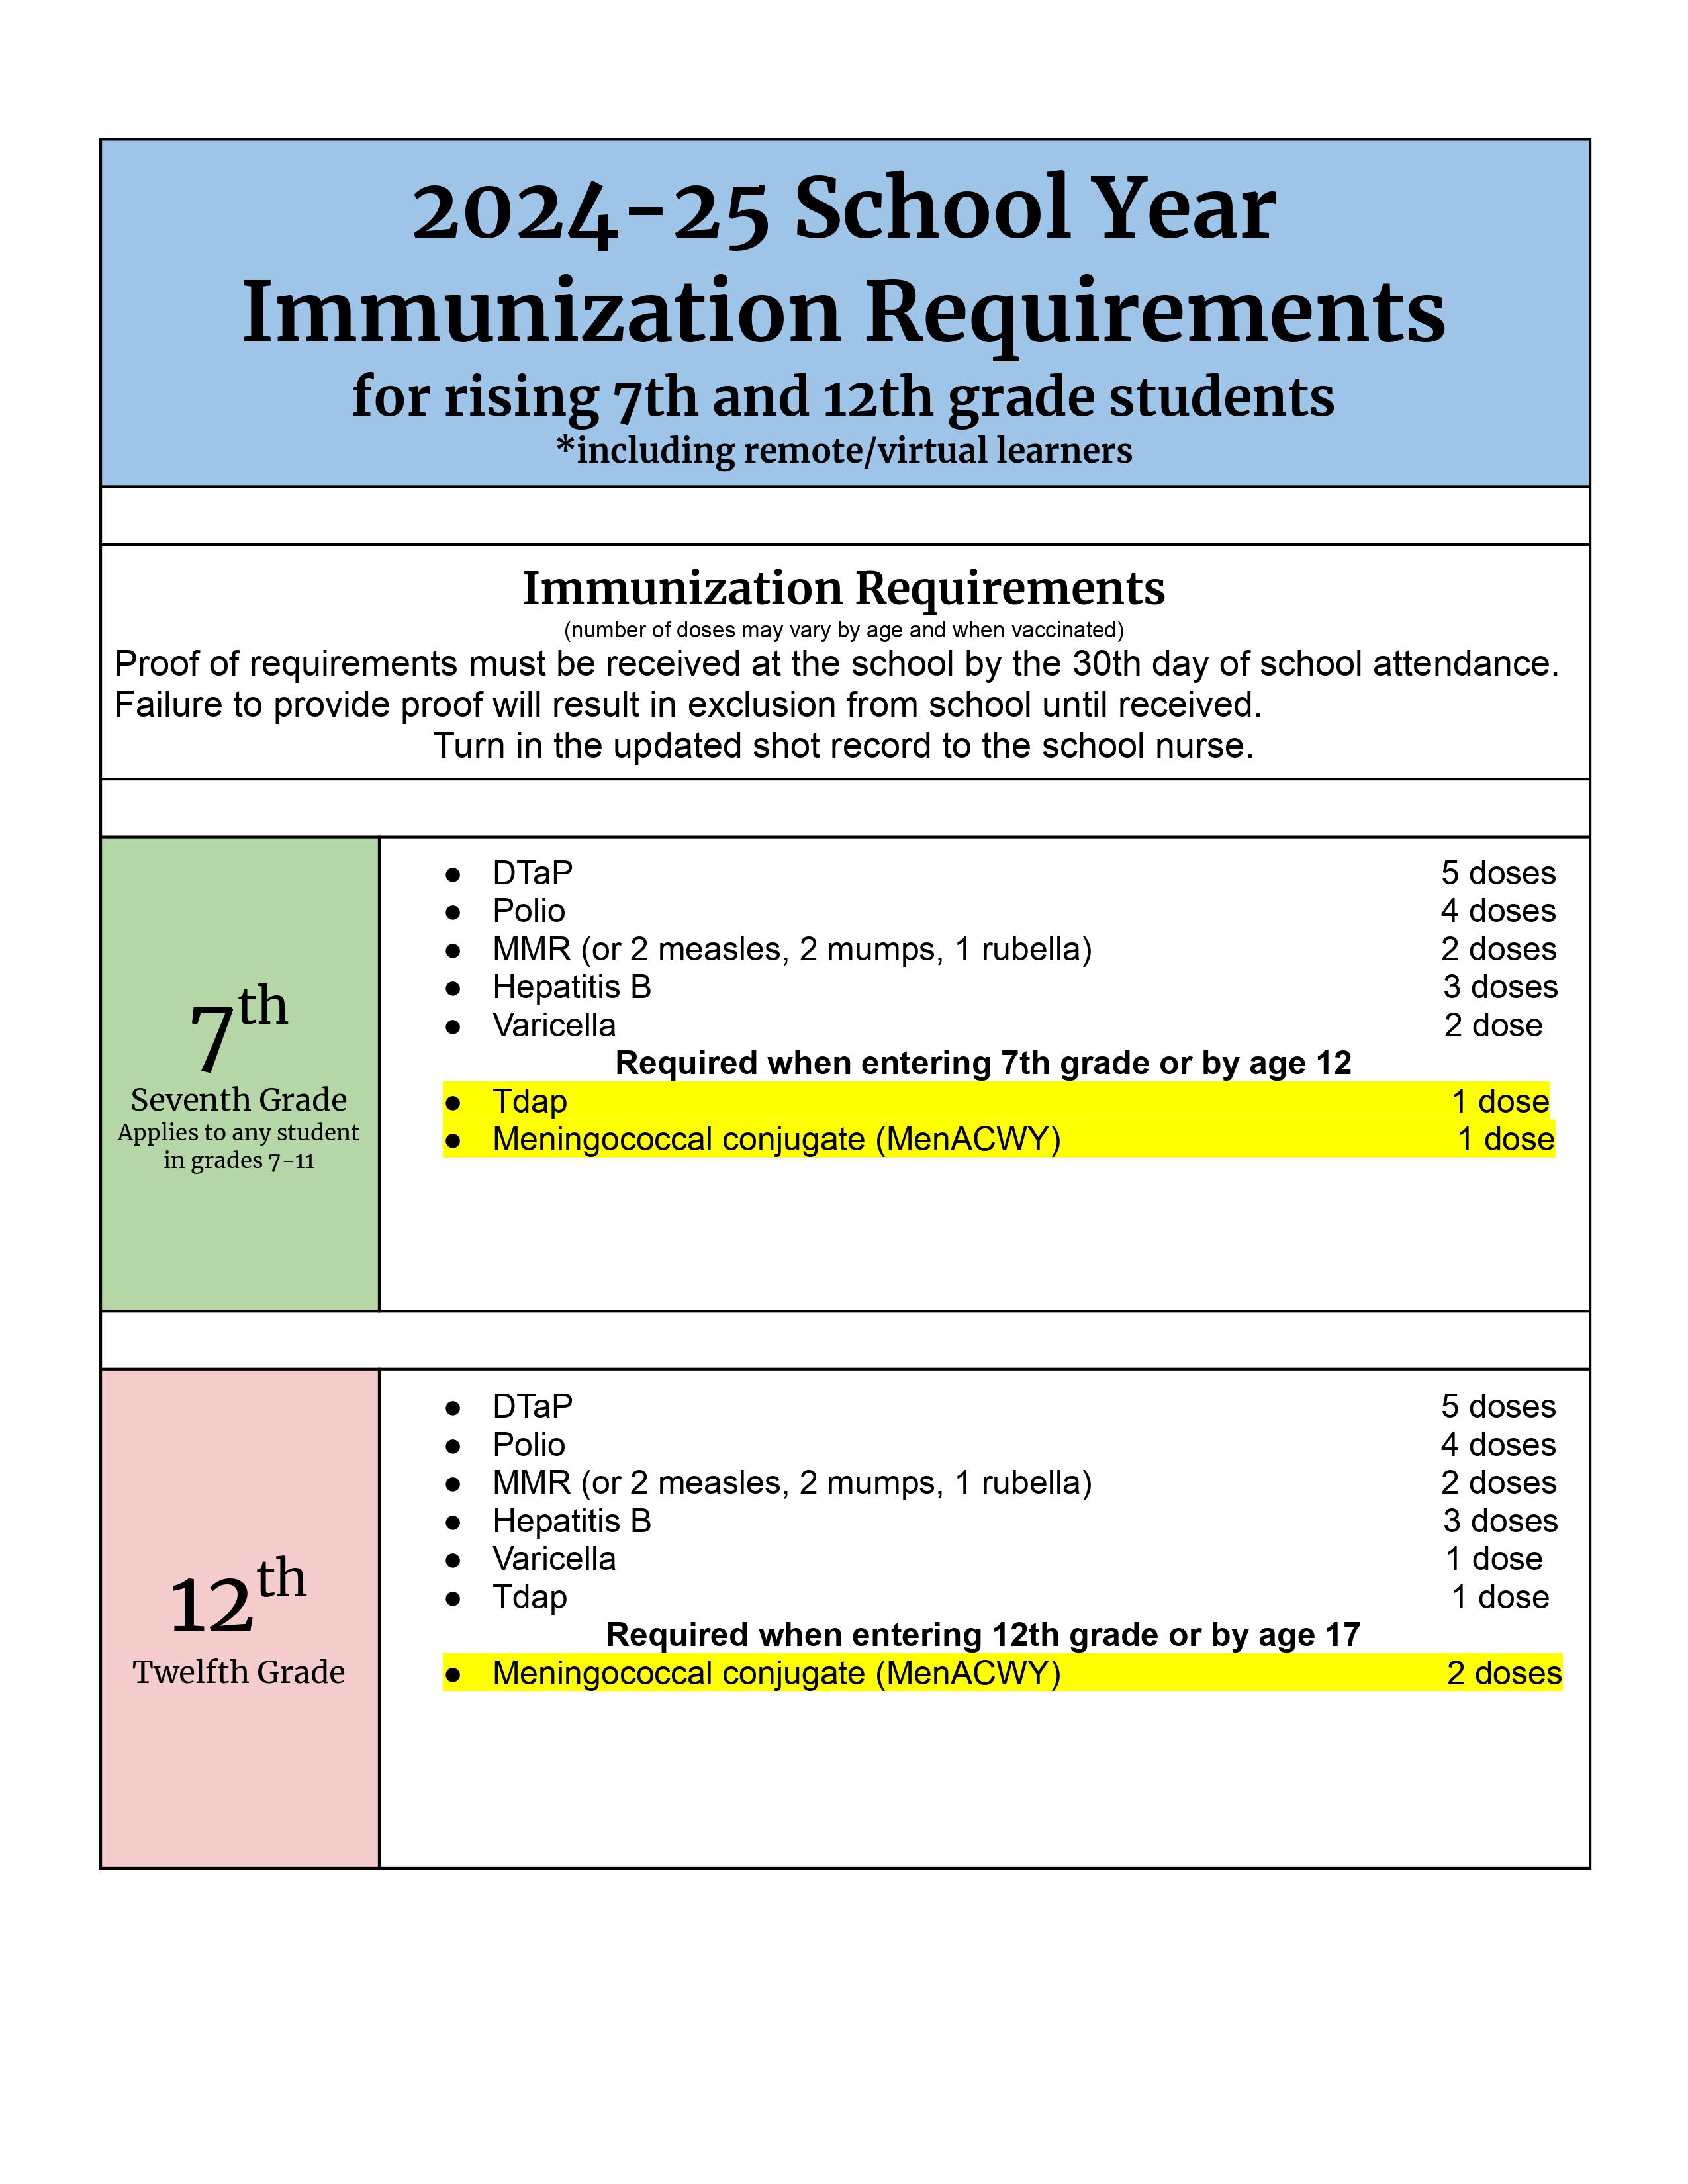 Immunization Requirements for 2024-2025 School Year